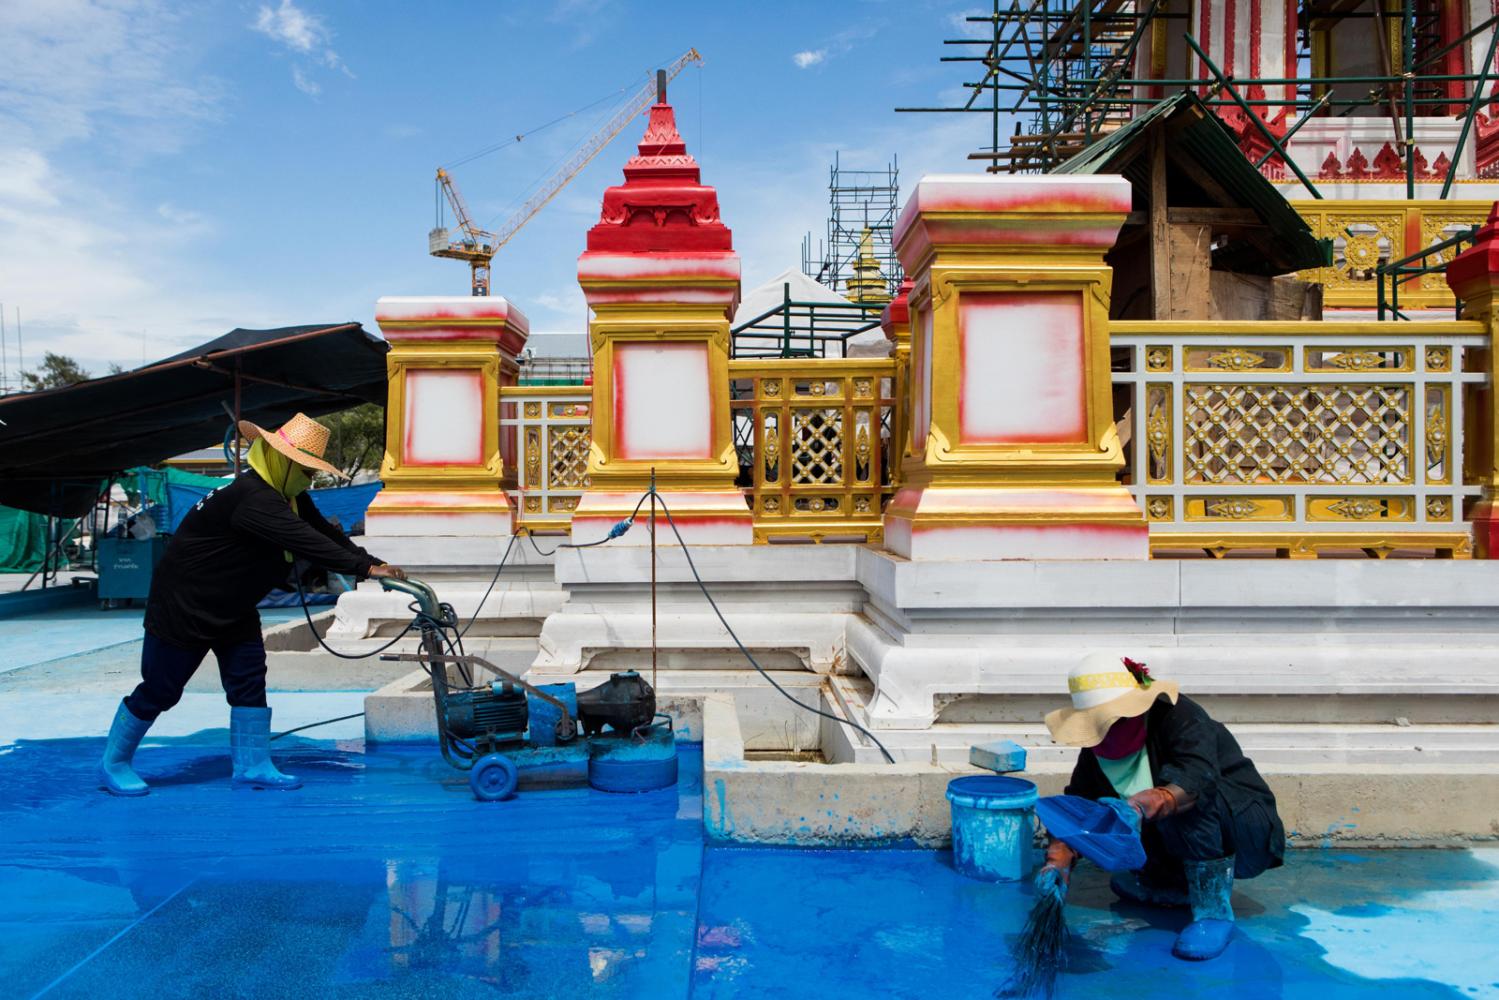 Singles - Construction work underway in Bangkok for the crematorium...